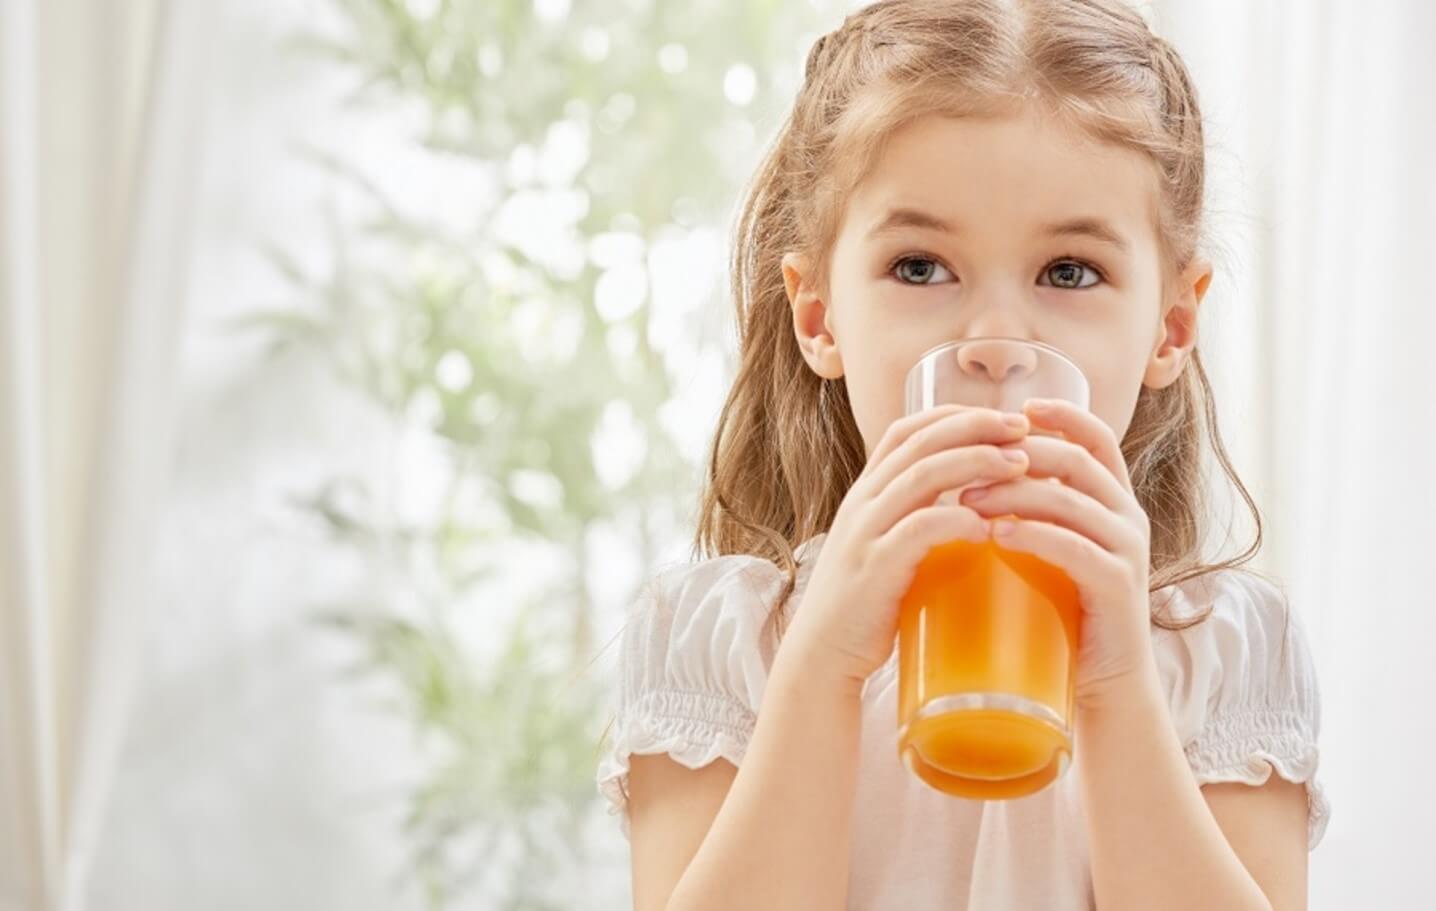 little girl drinking juice